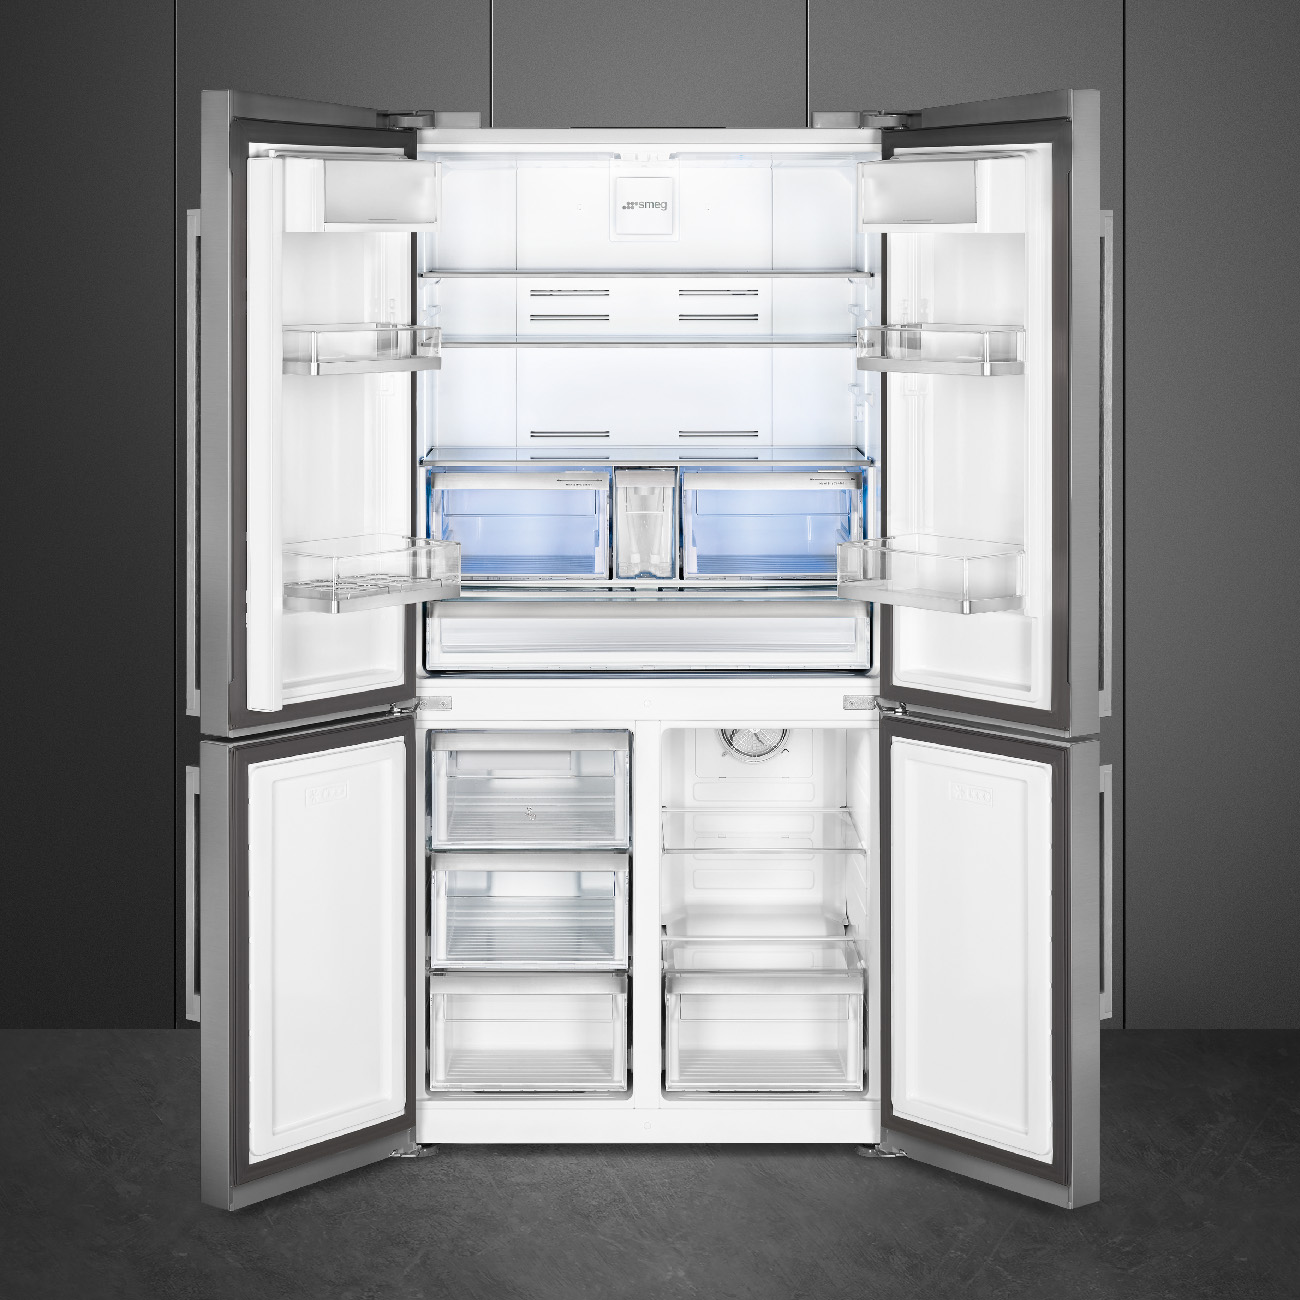 4 Doors Free standing refrigerator - Smeg_3